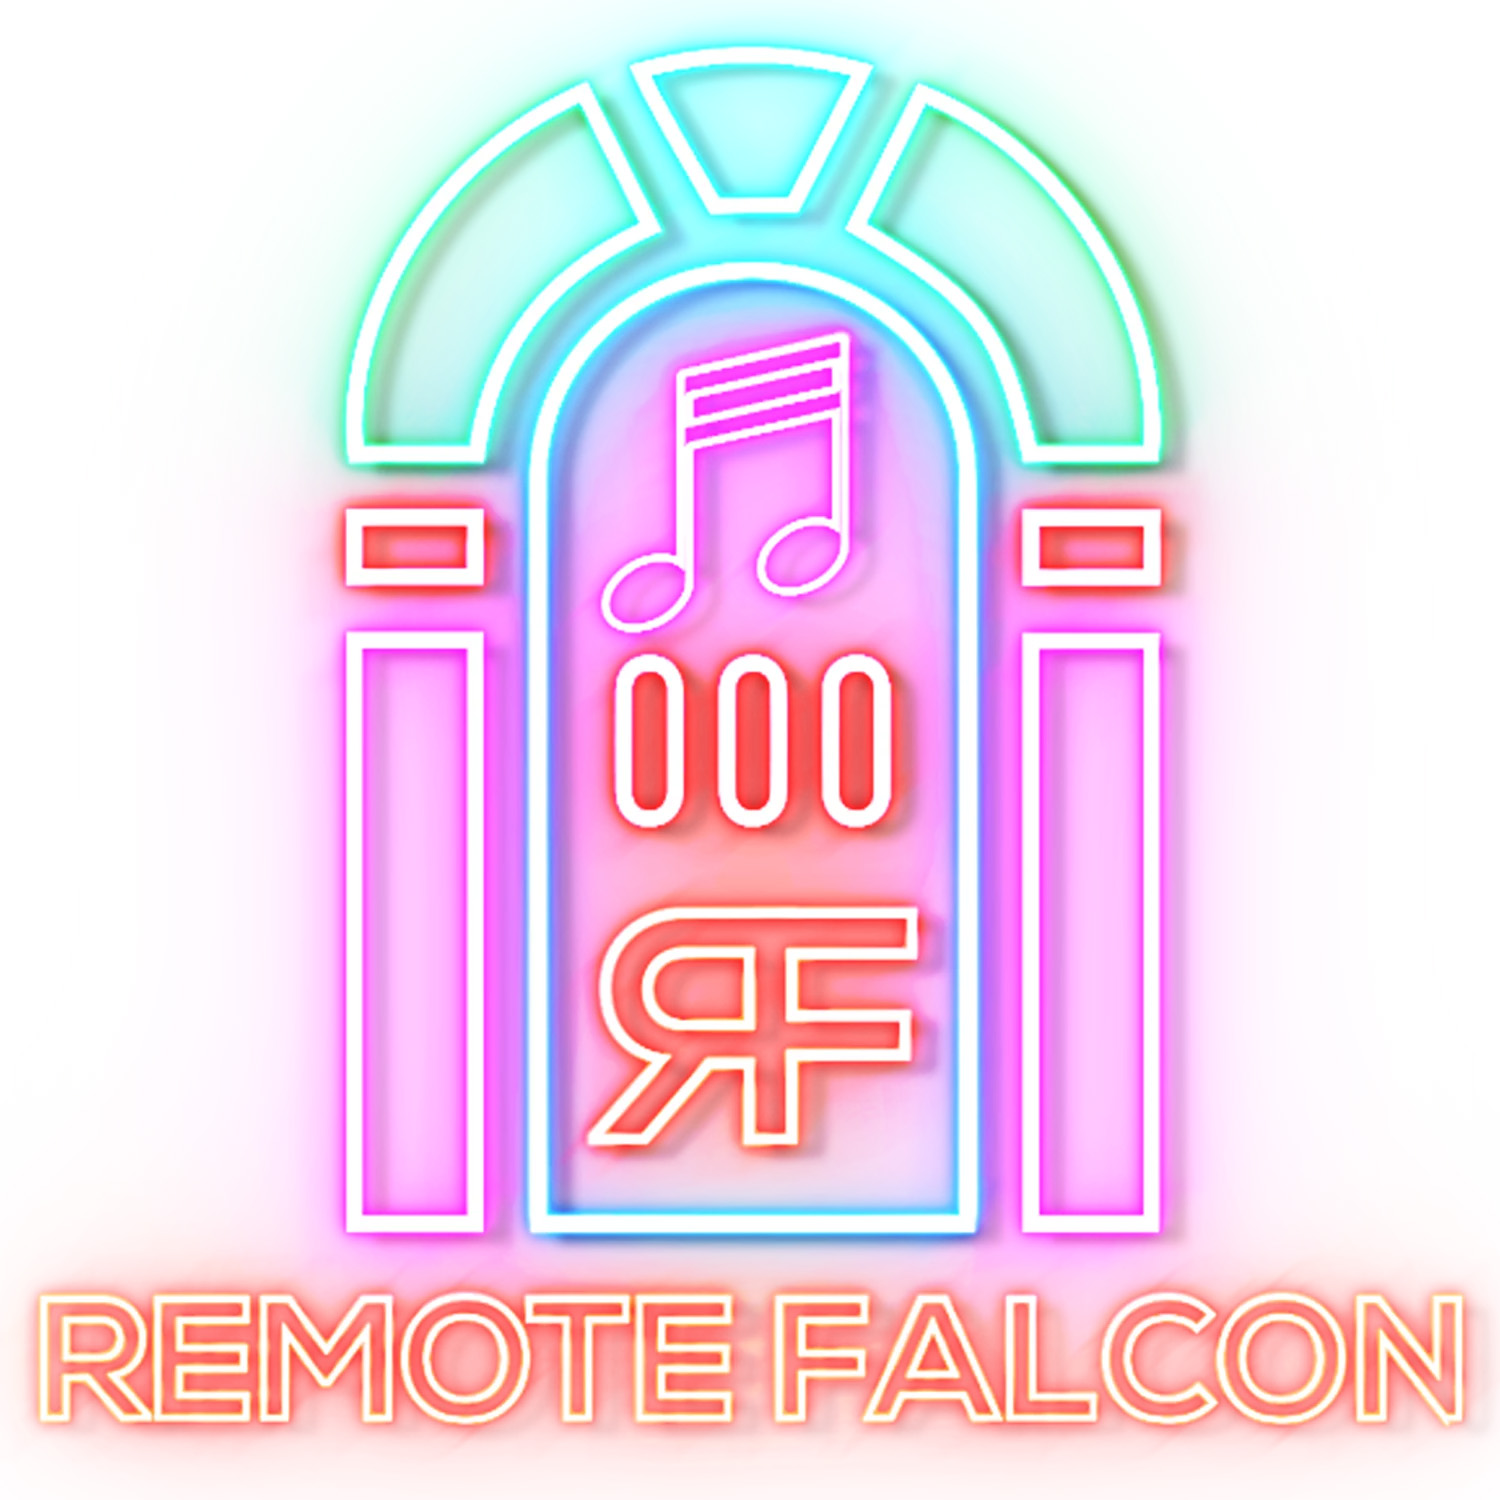 Remote Falcon Backgrounds